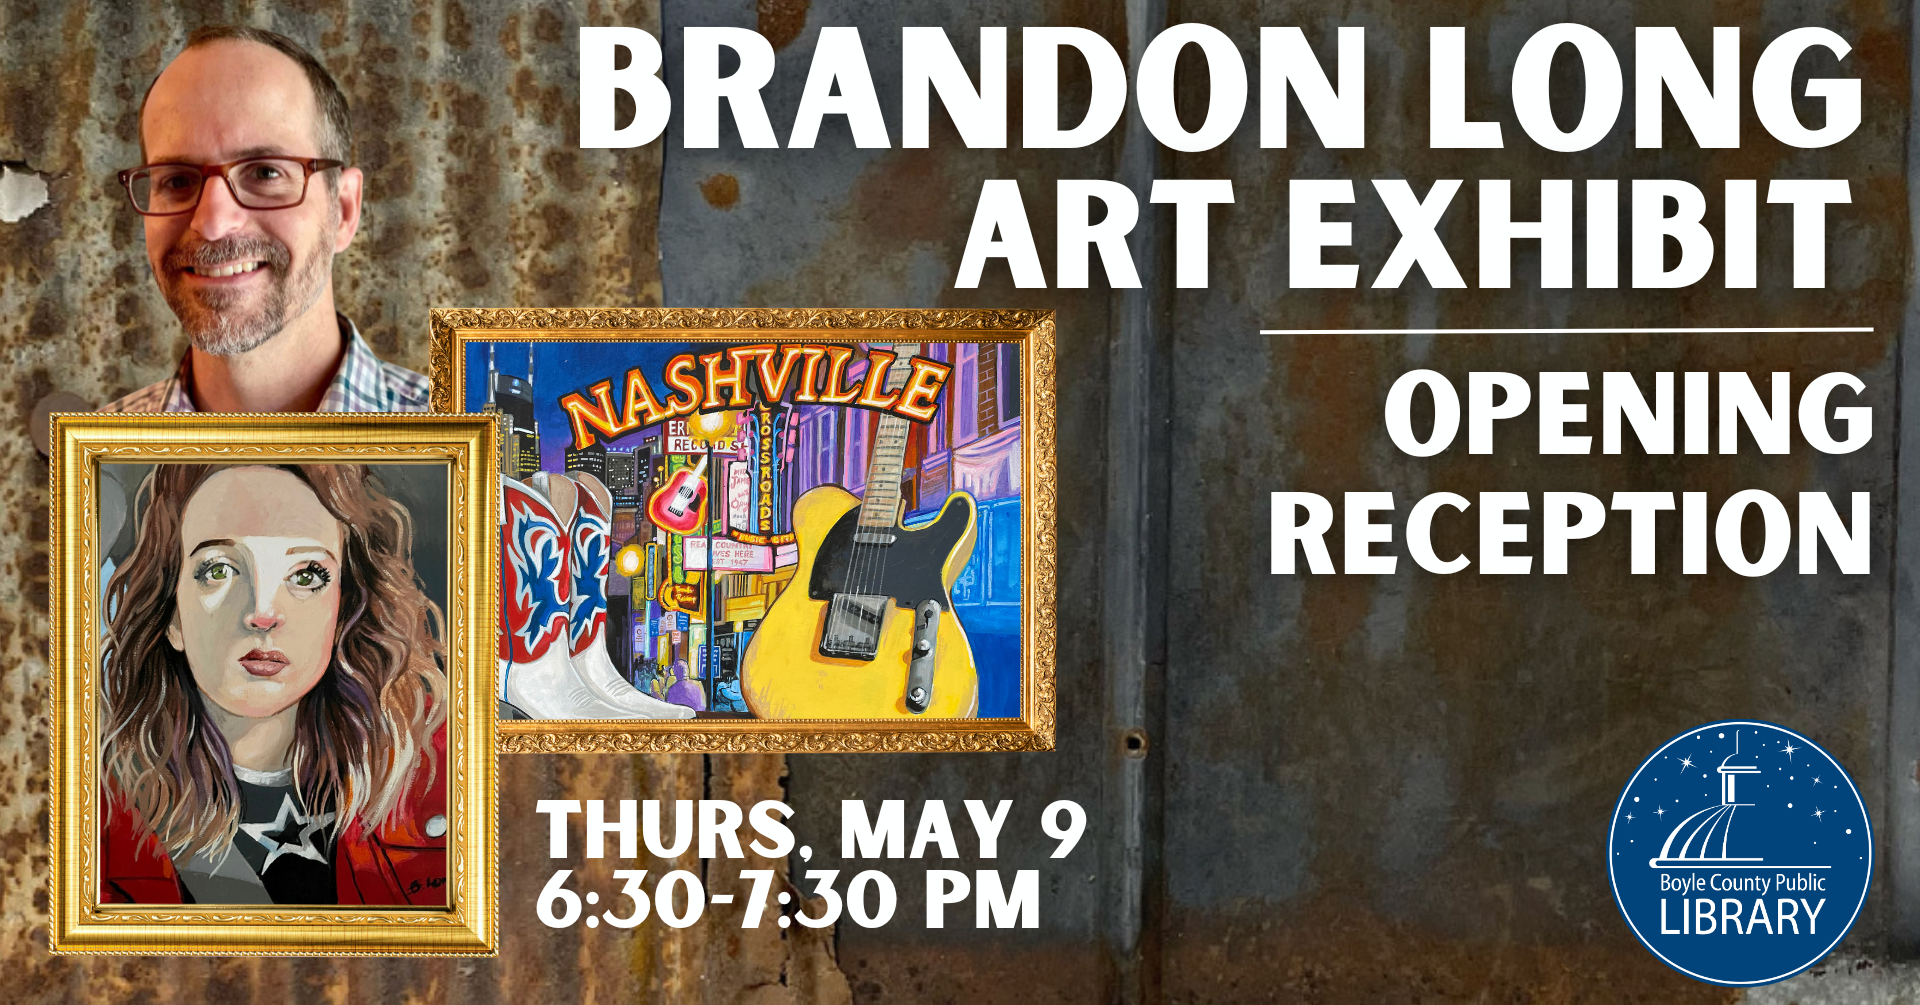 Brandon Long Art Exhibit reception